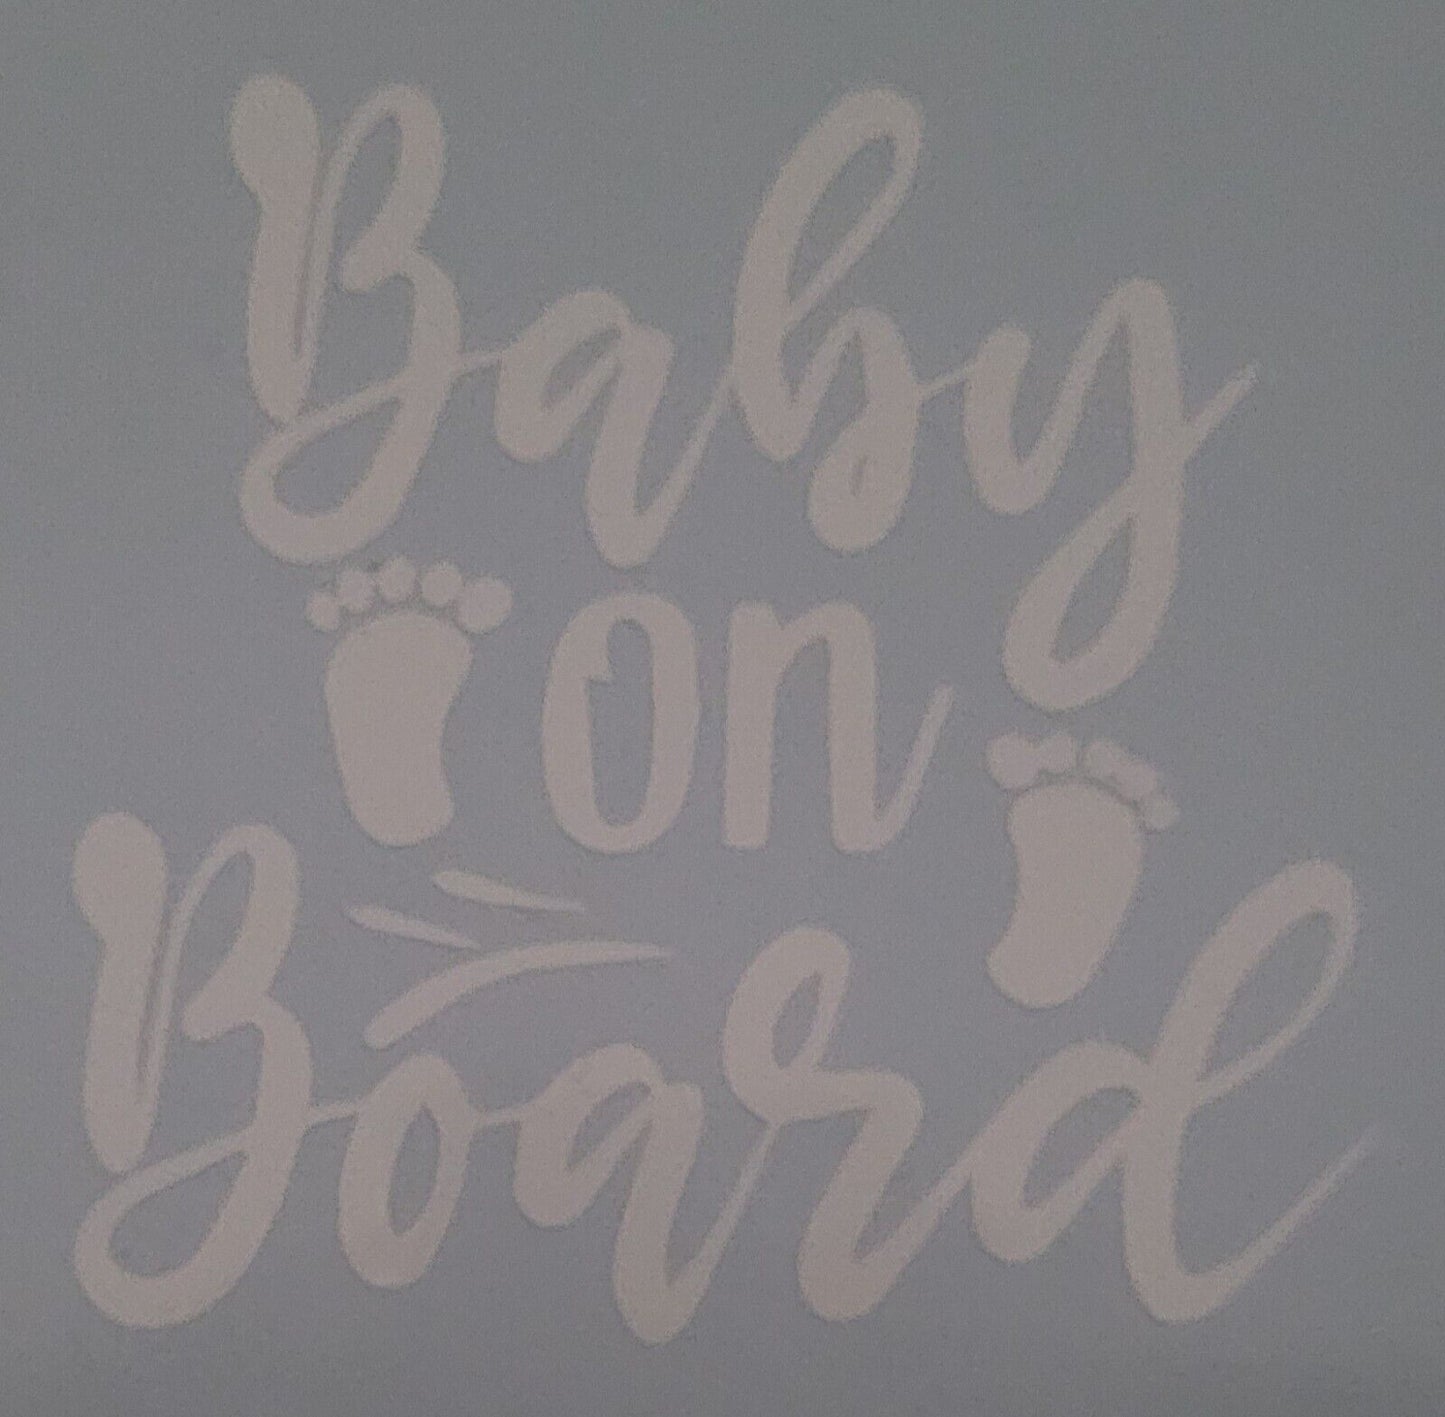 Baby On Board 10cm x 10cm Vinyl Sticker / decal Windows Automotive Marine.